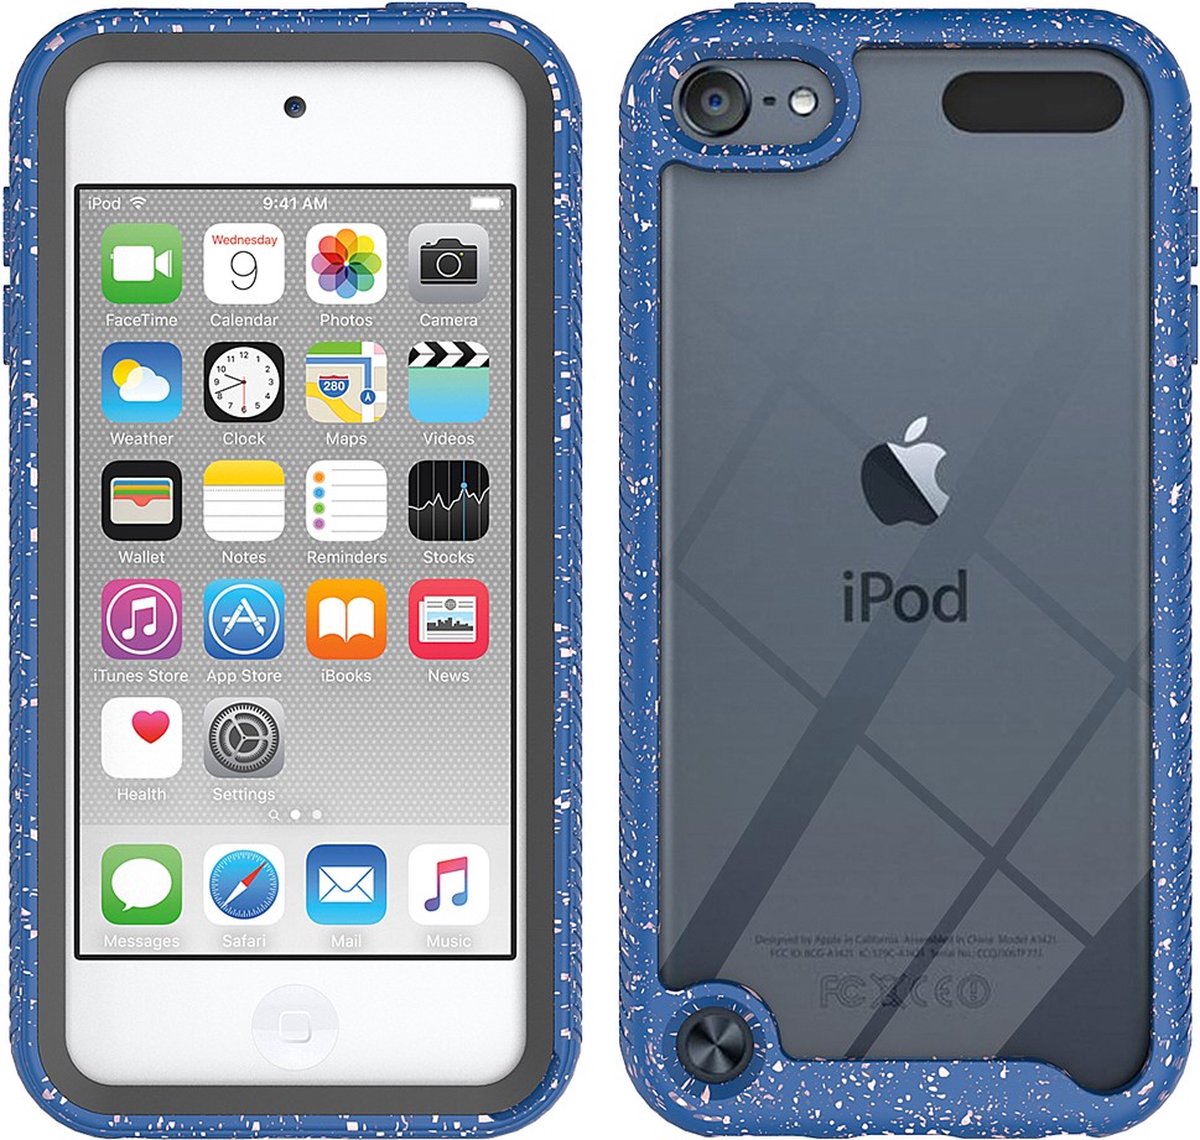 Peachy Hybrid spikkels en beschermend TPU spikkels hoesje voor iPod Touch 5, 6 en 7 - blauw - Peachy